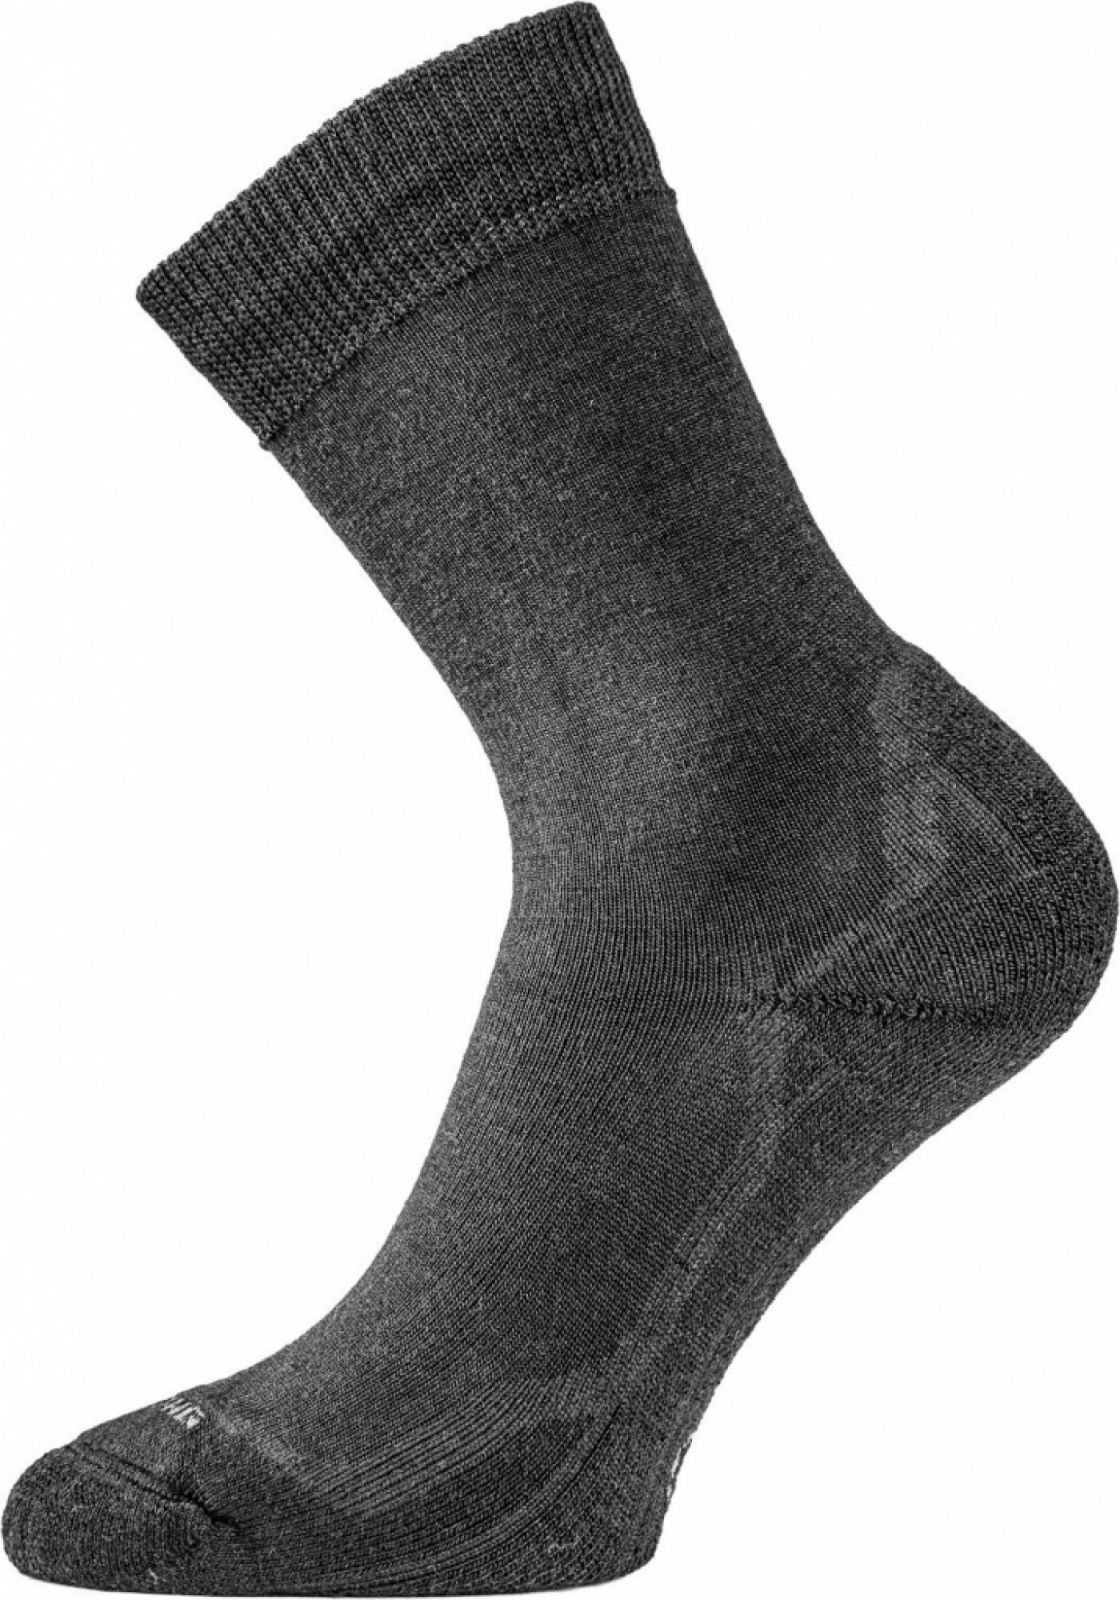 Ponožky Lasting Merino černé WHI-909 Black